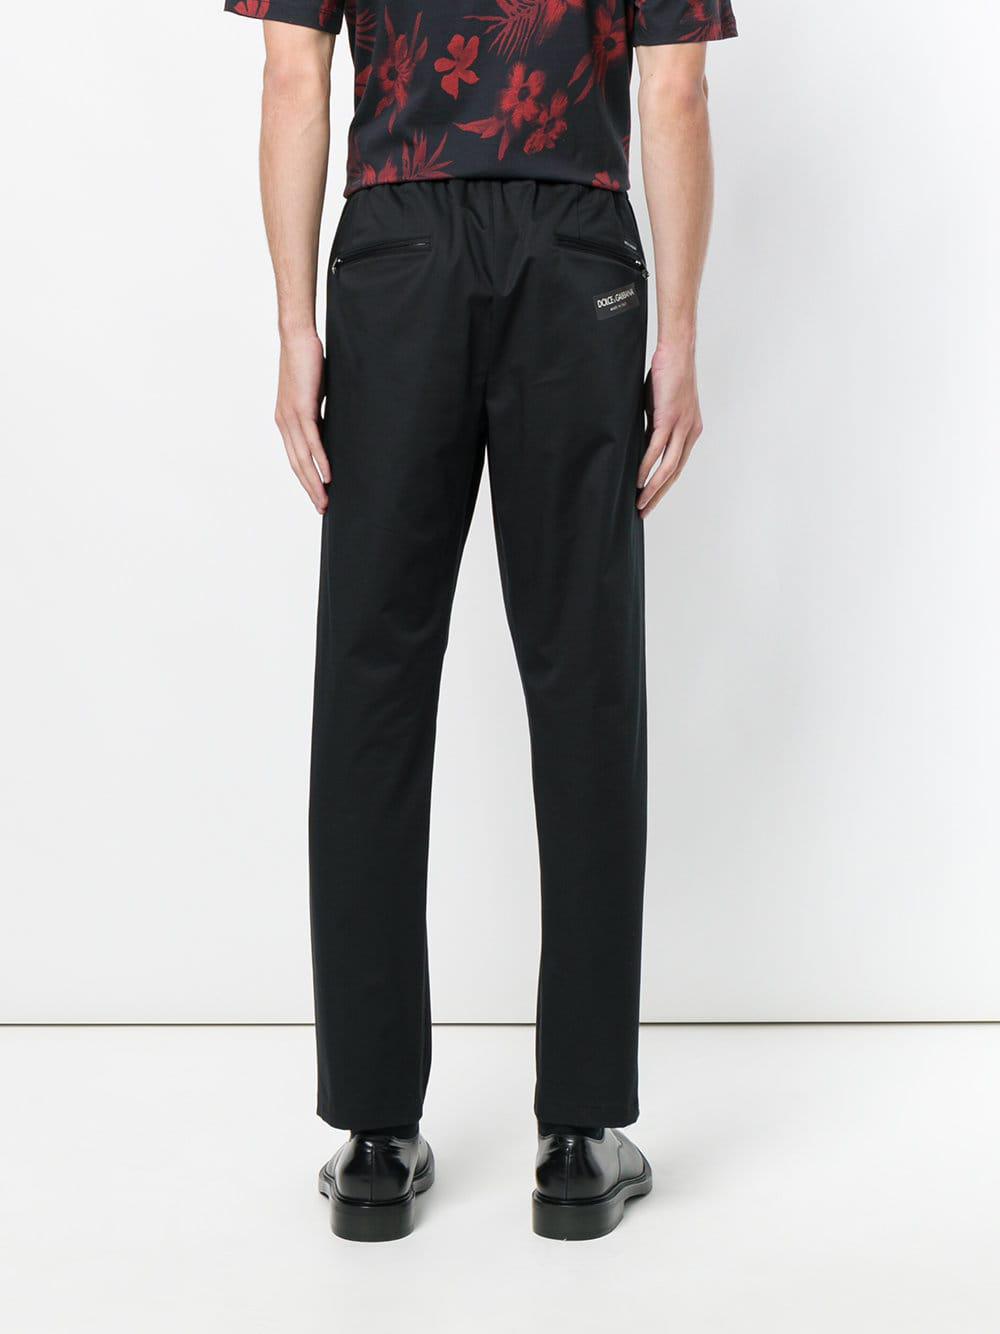 Dolce & Gabbana Straight Leg joggers in Black for Men - Lyst